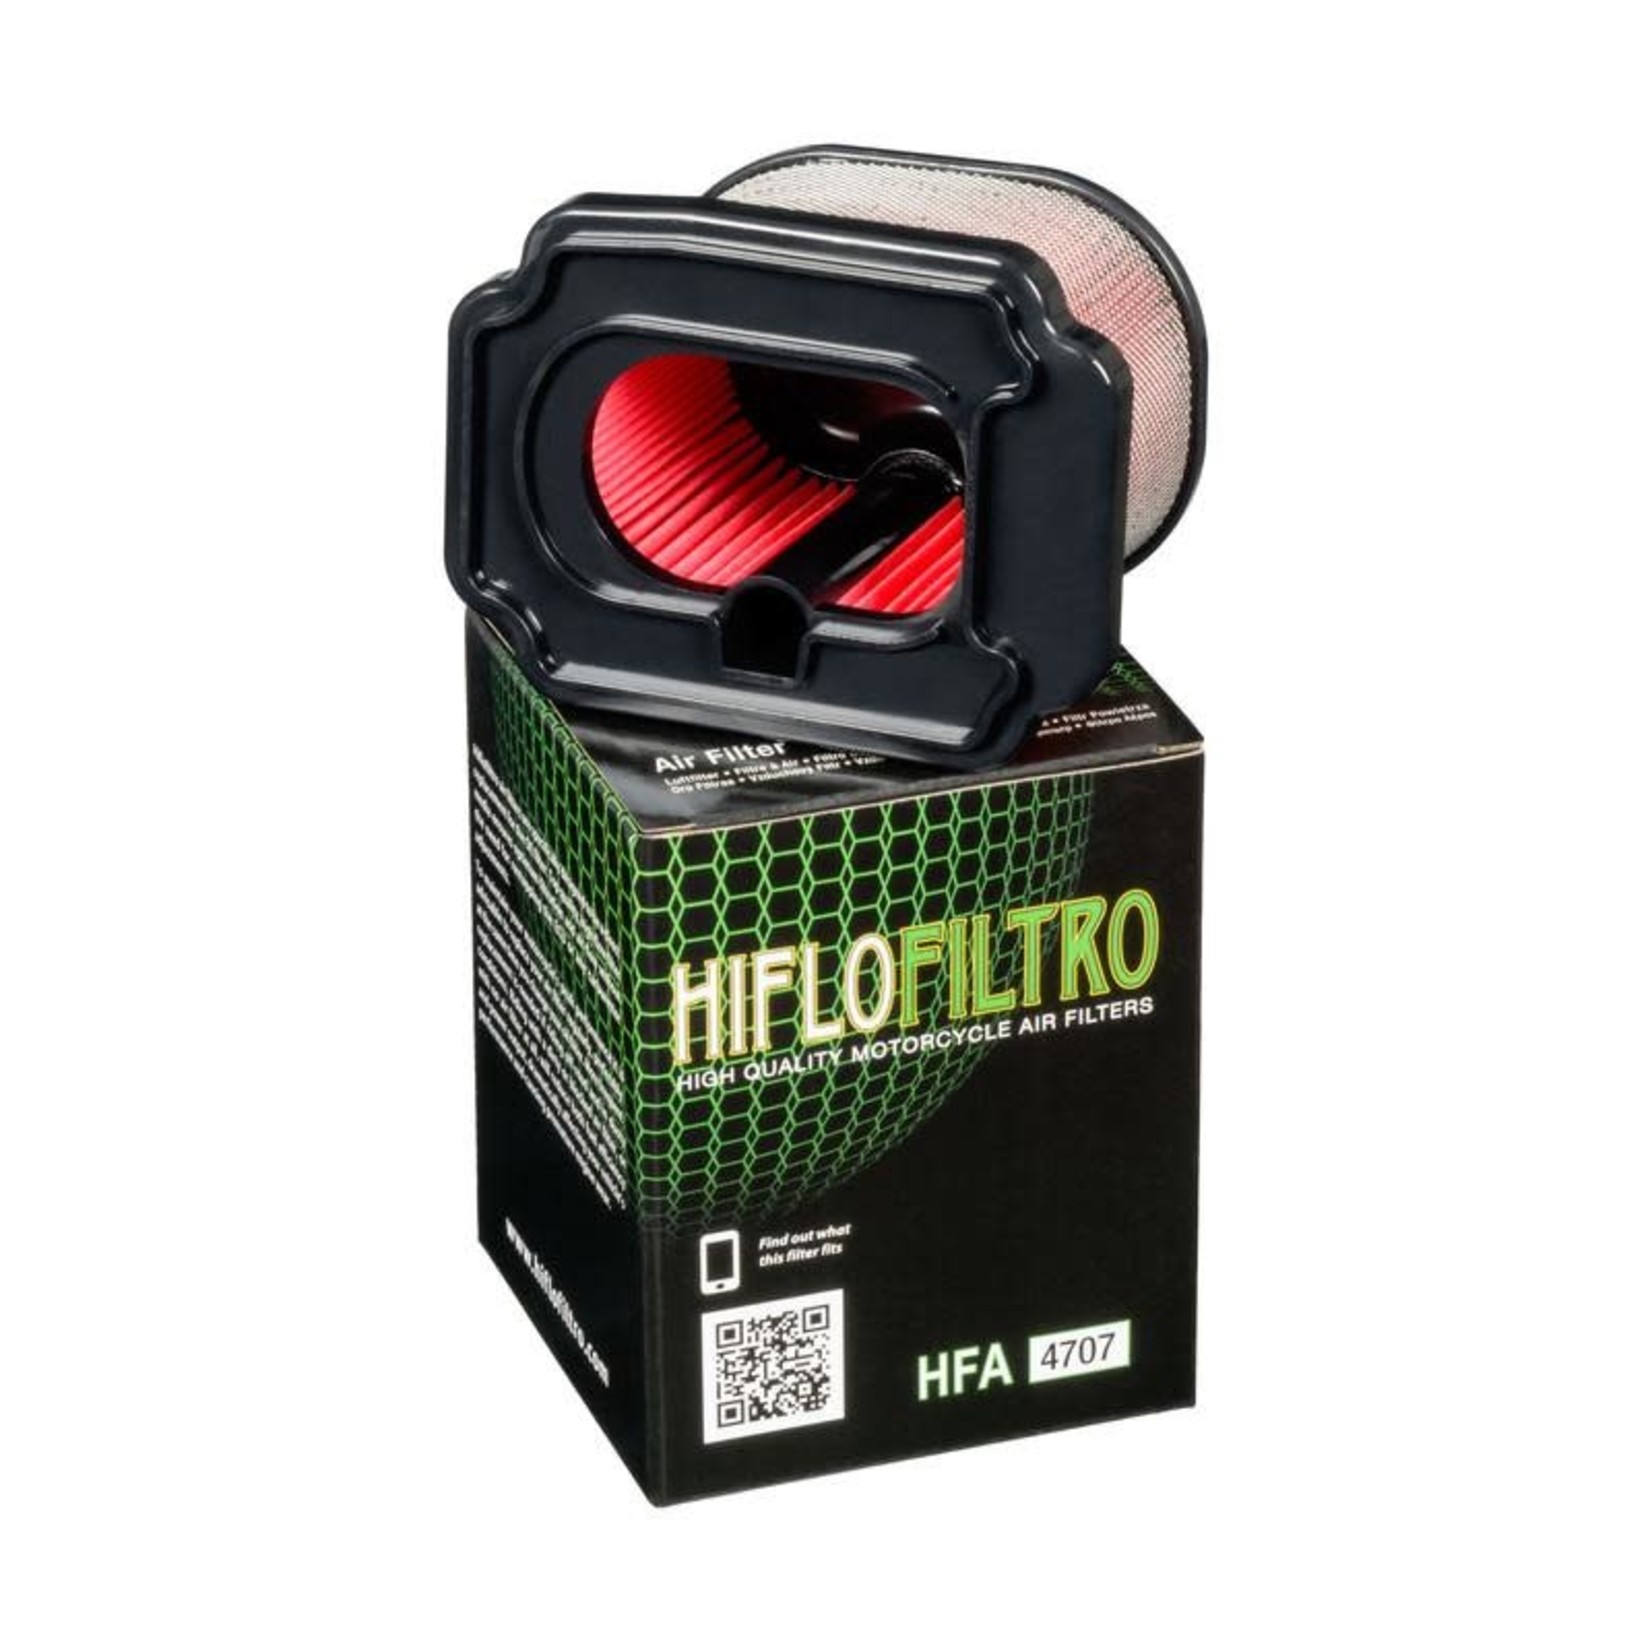 Hiflo Filtro Air filter HFA 4707 Tenere